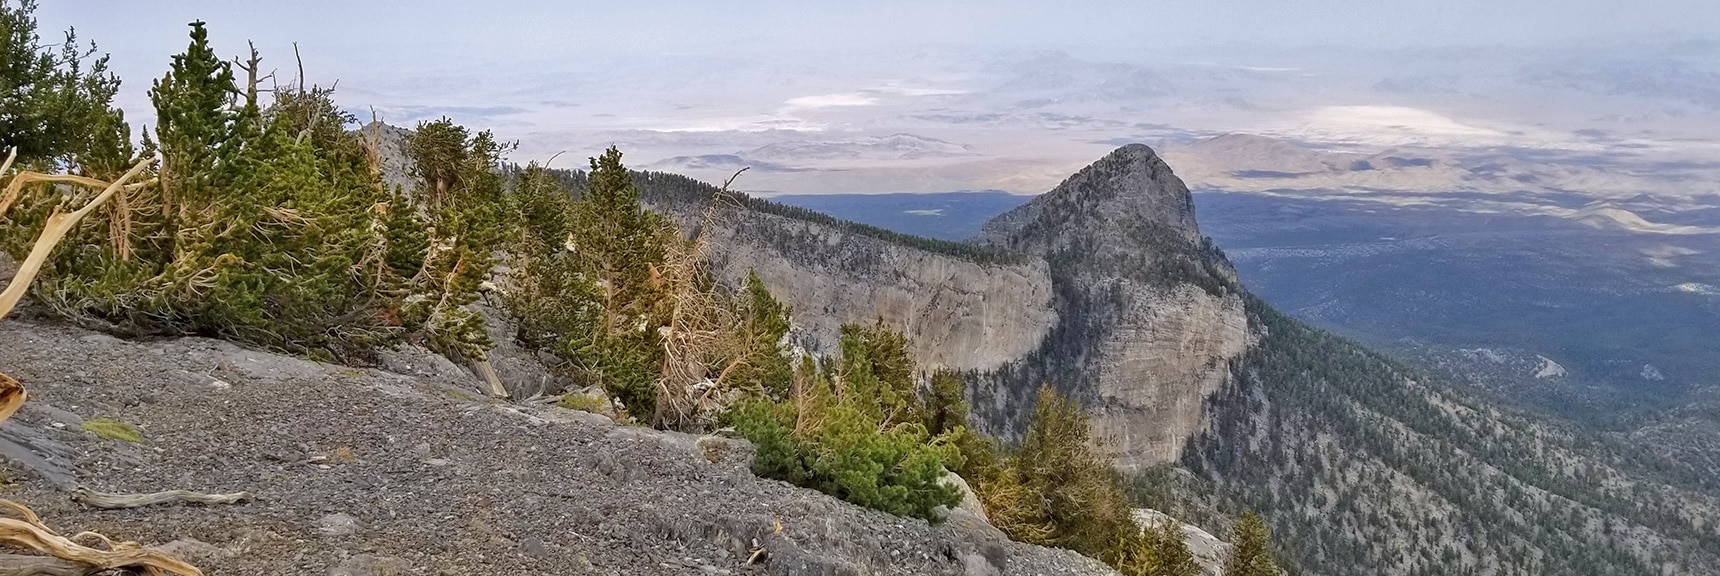 View of Mummy's Head from the Eastern Summit Cliffs | Mummy Mountain Northern Rim Overlook, Spring Mountain Wilderness, Nevada